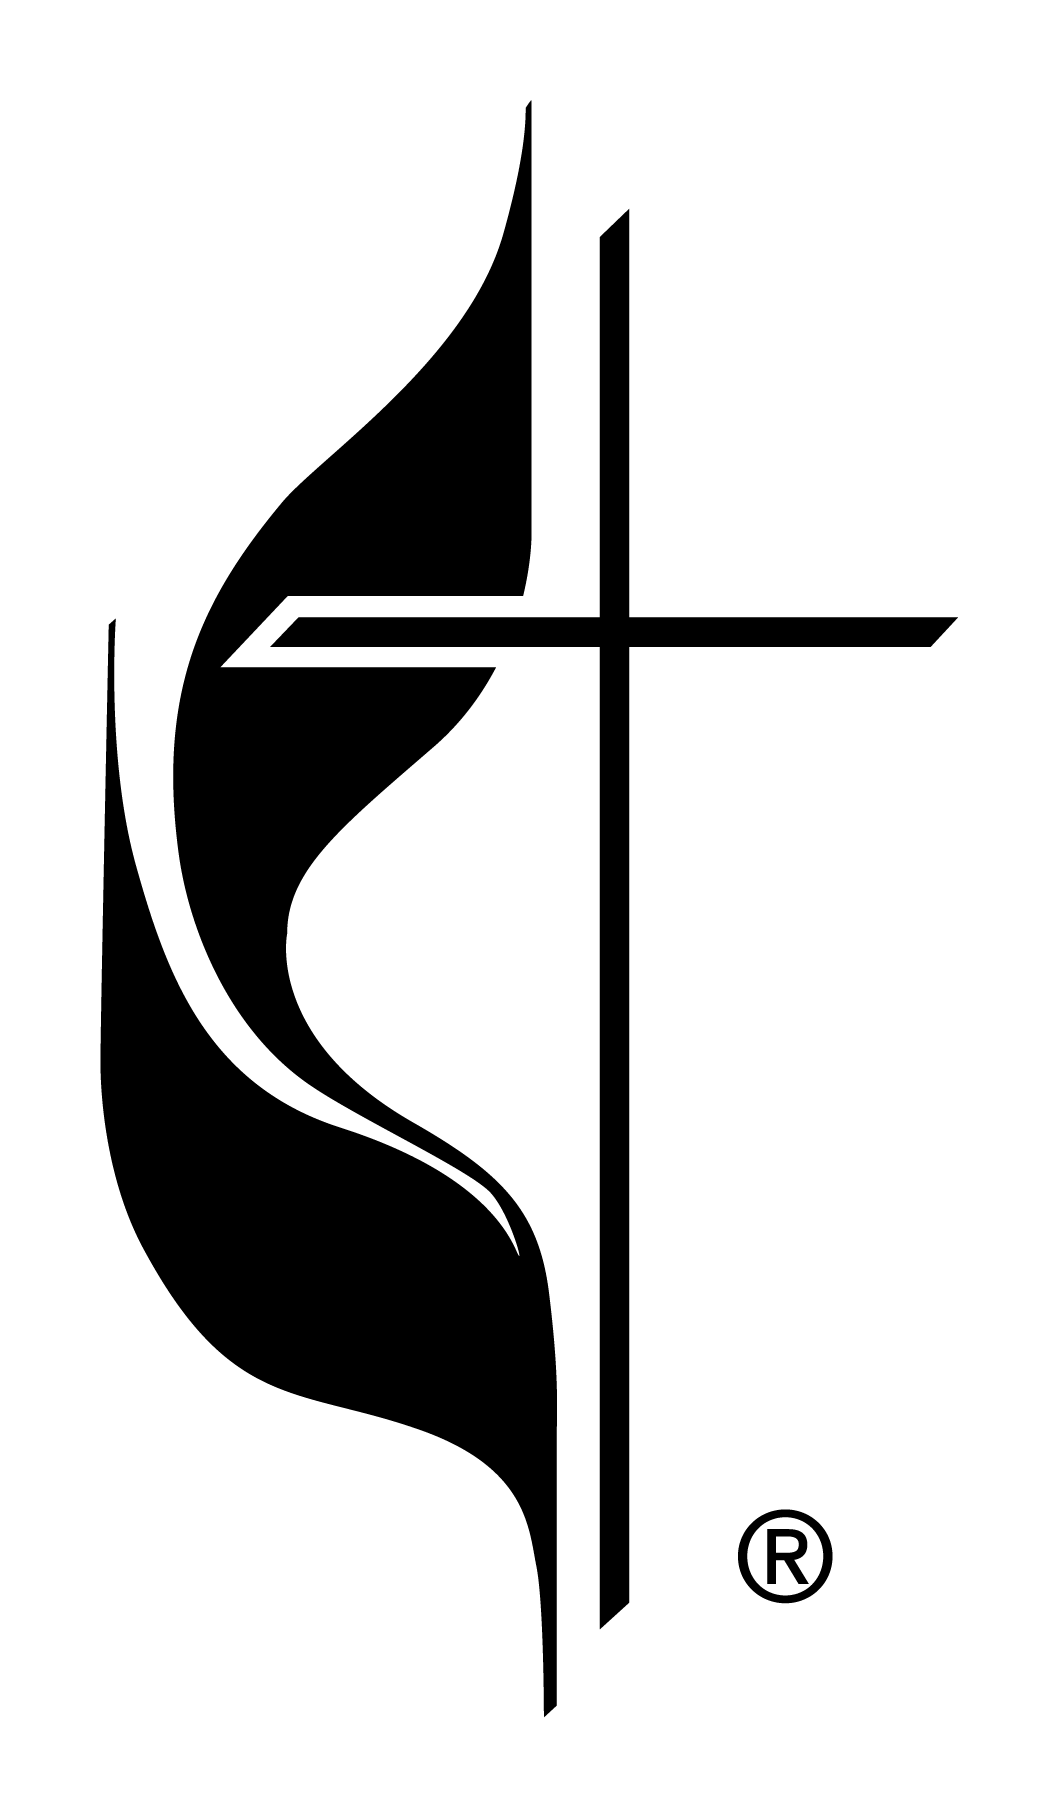 Who Has White Cross Logo - Cross and Flame